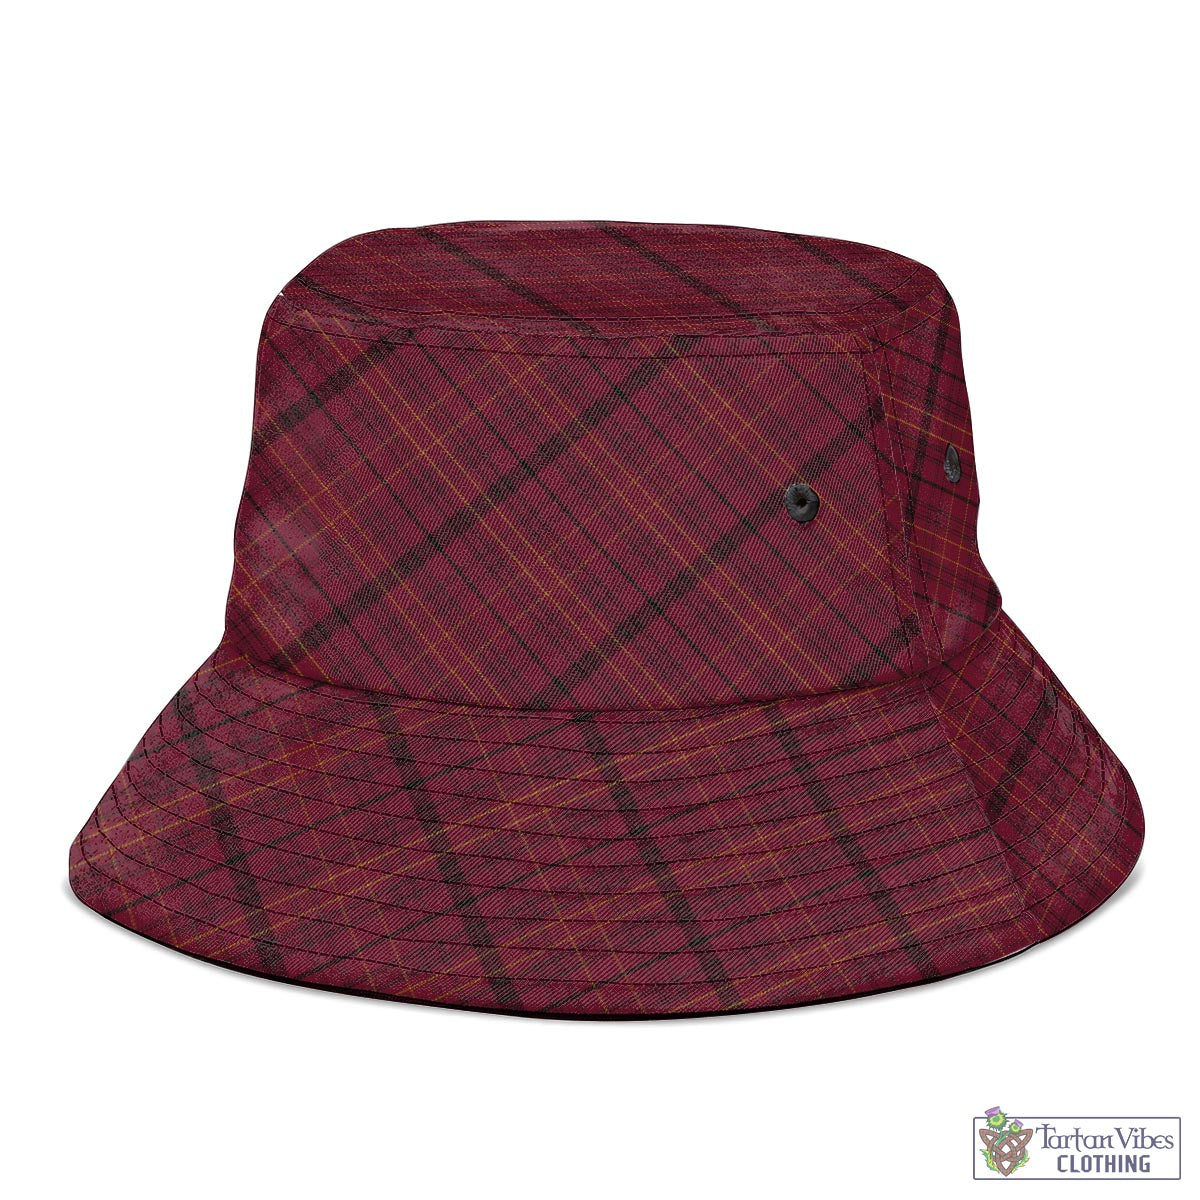 Tartan Vibes Clothing Williams of Wales Tartan Bucket Hat